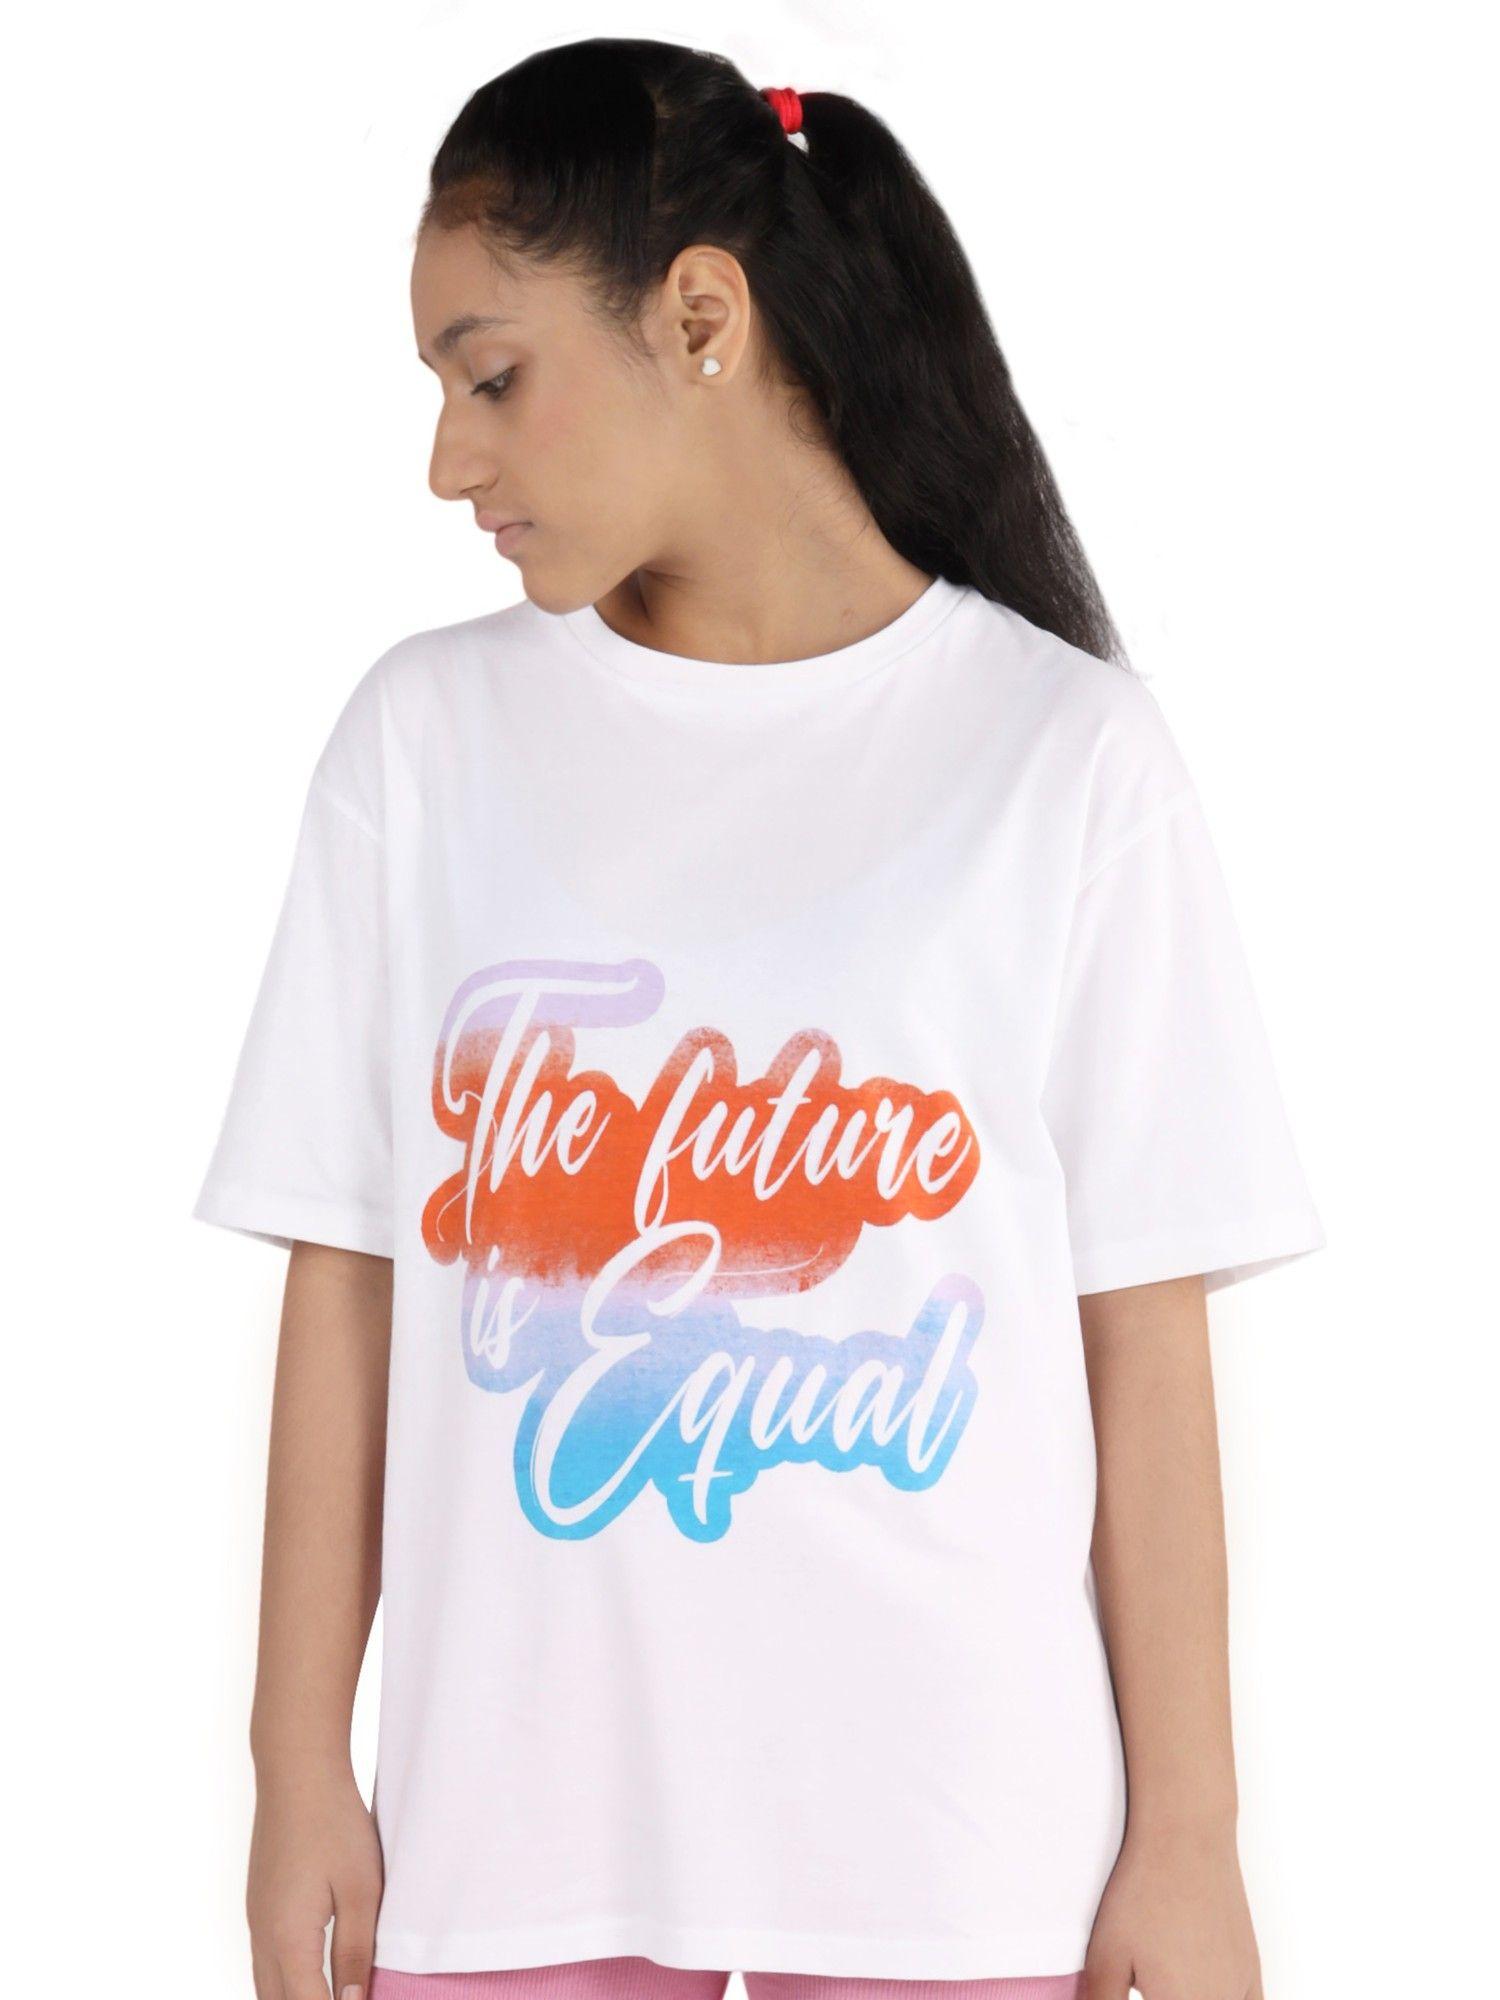 Girls White T-Shirt Printed